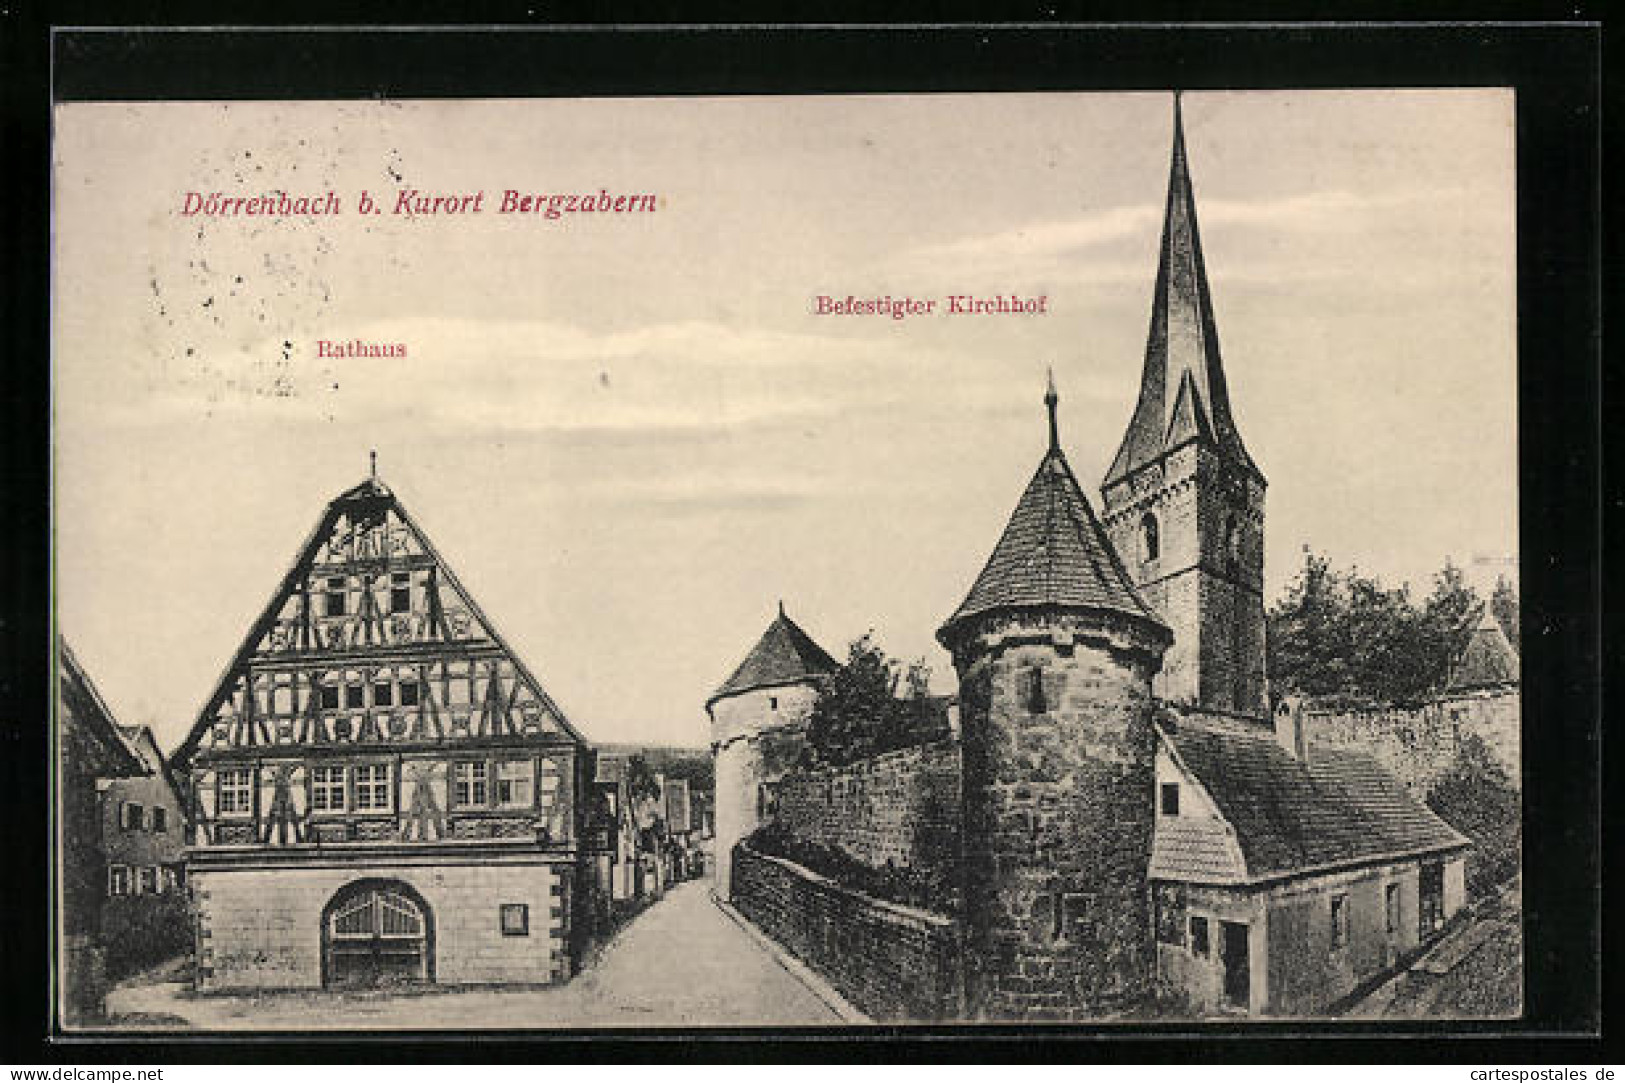 AK Dörrenbach / Bergzabern, Rathaus, Befestigter Kirchhof  - Bad Bergzabern